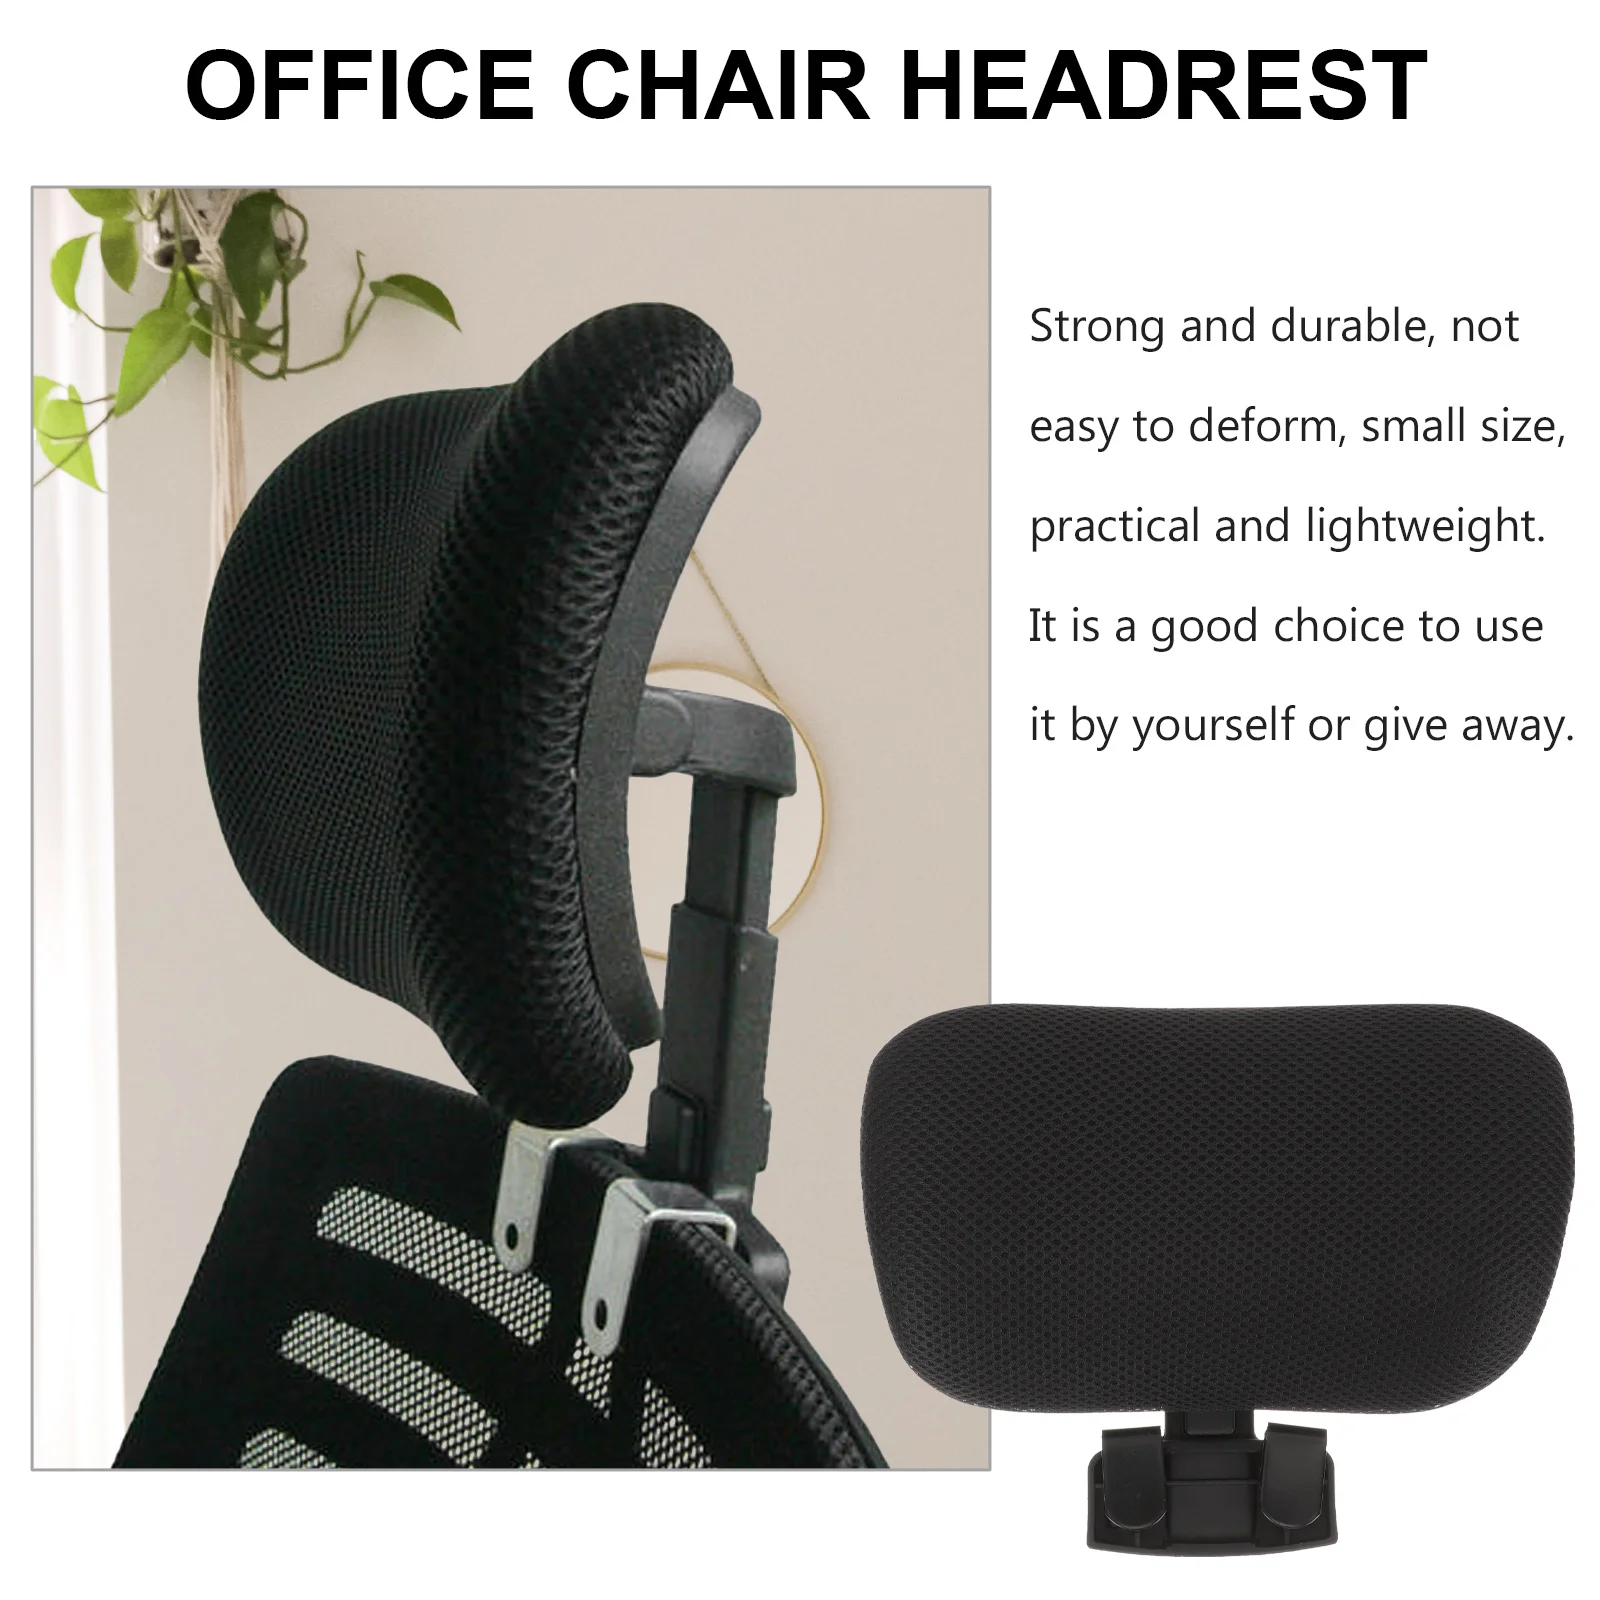 https://ae01.alicdn.com/kf/S28982952990b49f3b3d8fec4ac4f88abM/Office-Computer-Chair-Headrest-Retrofit-Adjustable-Computer-Chair-Pillow-Breathable-Chair-Head-Rest-For-Office.jpg